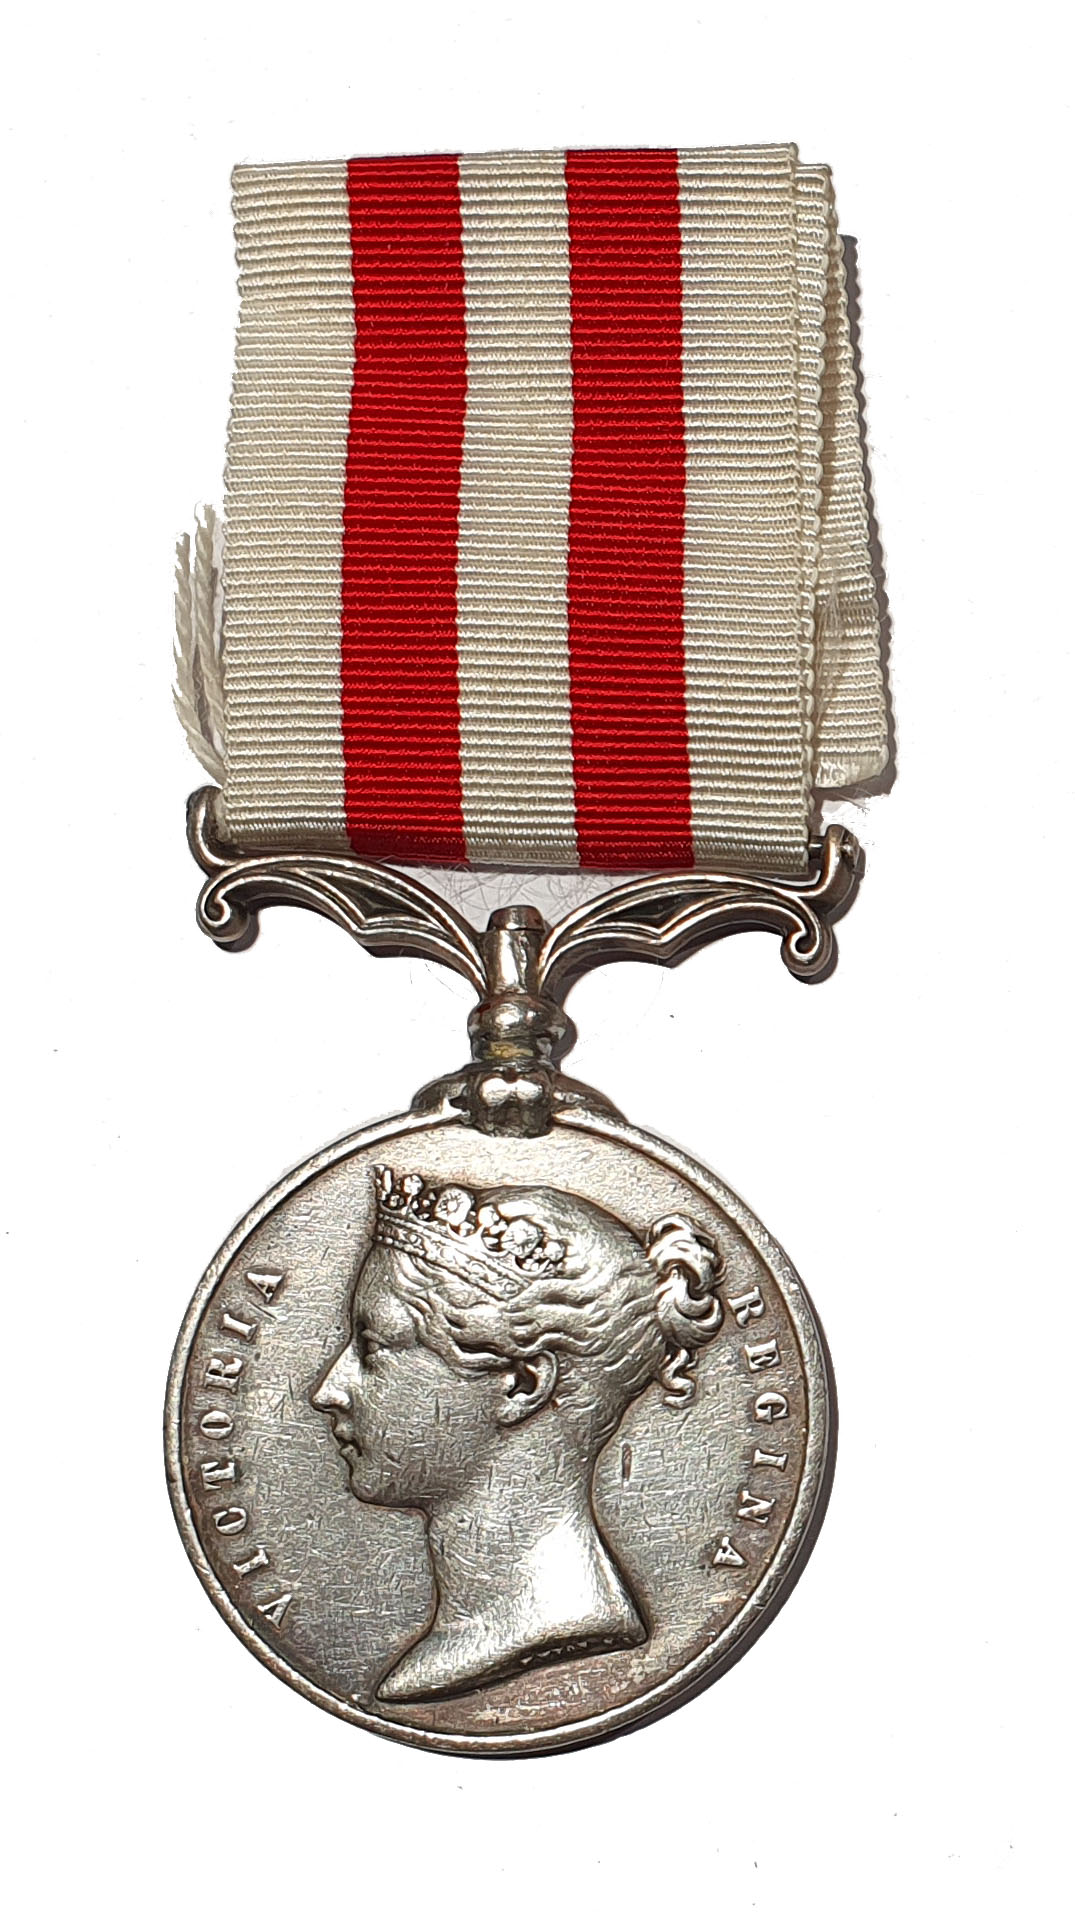 Indian Mutiny Medal, 1857-58, no clasp, awarded to Naick Muhtab Singh